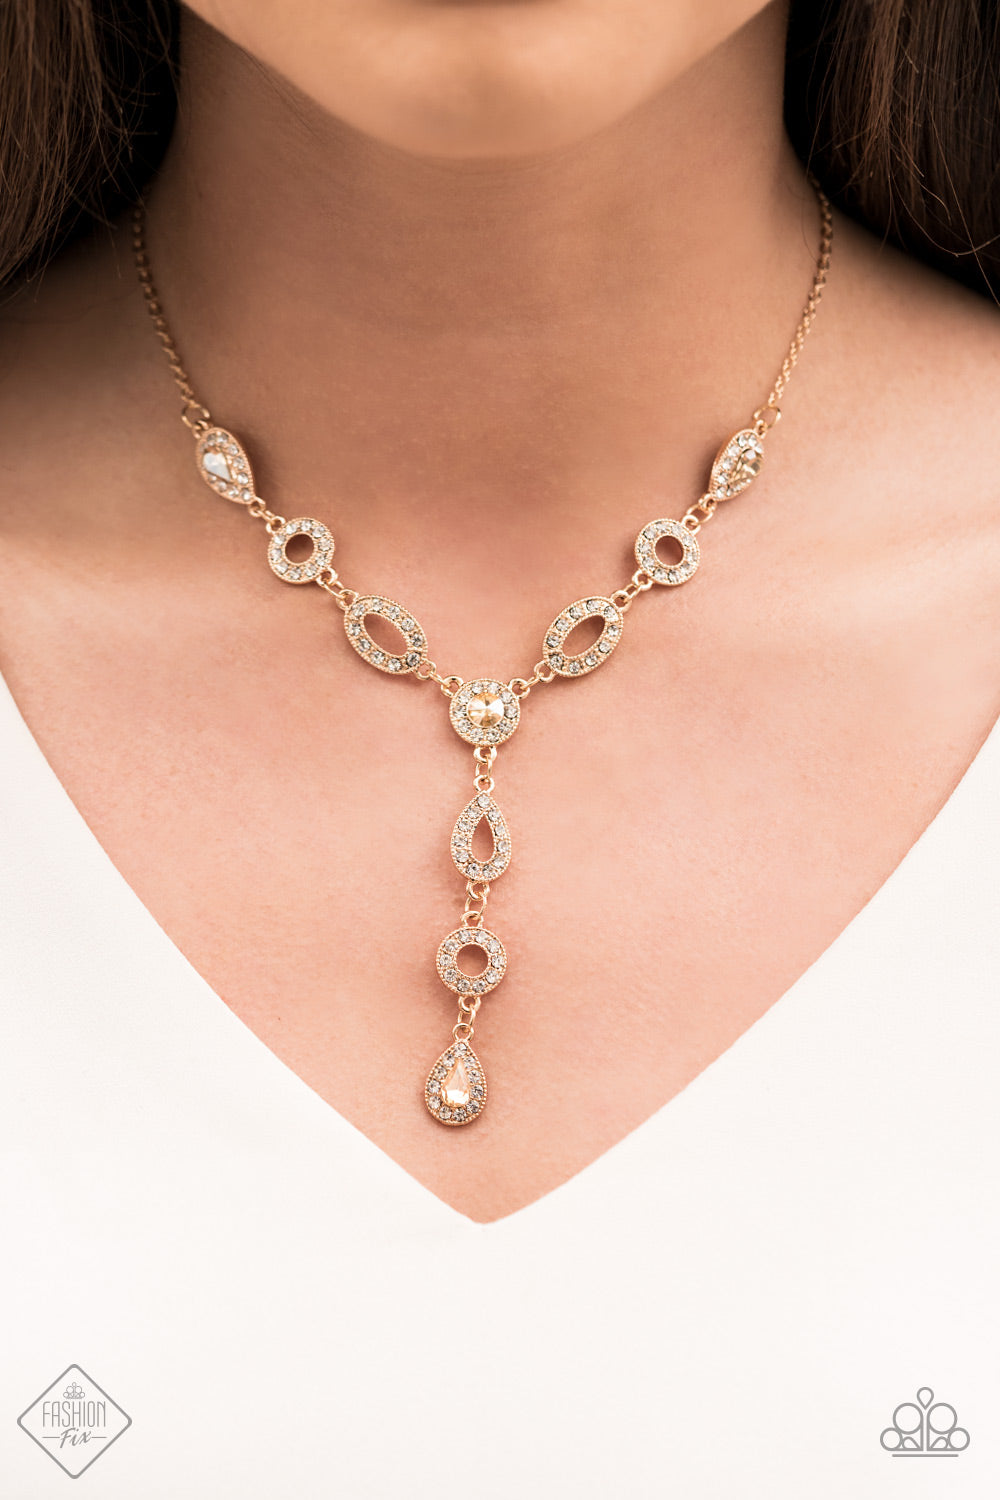 Paparazzi Royal Redux - Gold Fashion Fix Necklace - A Finishing Touch Jewelry